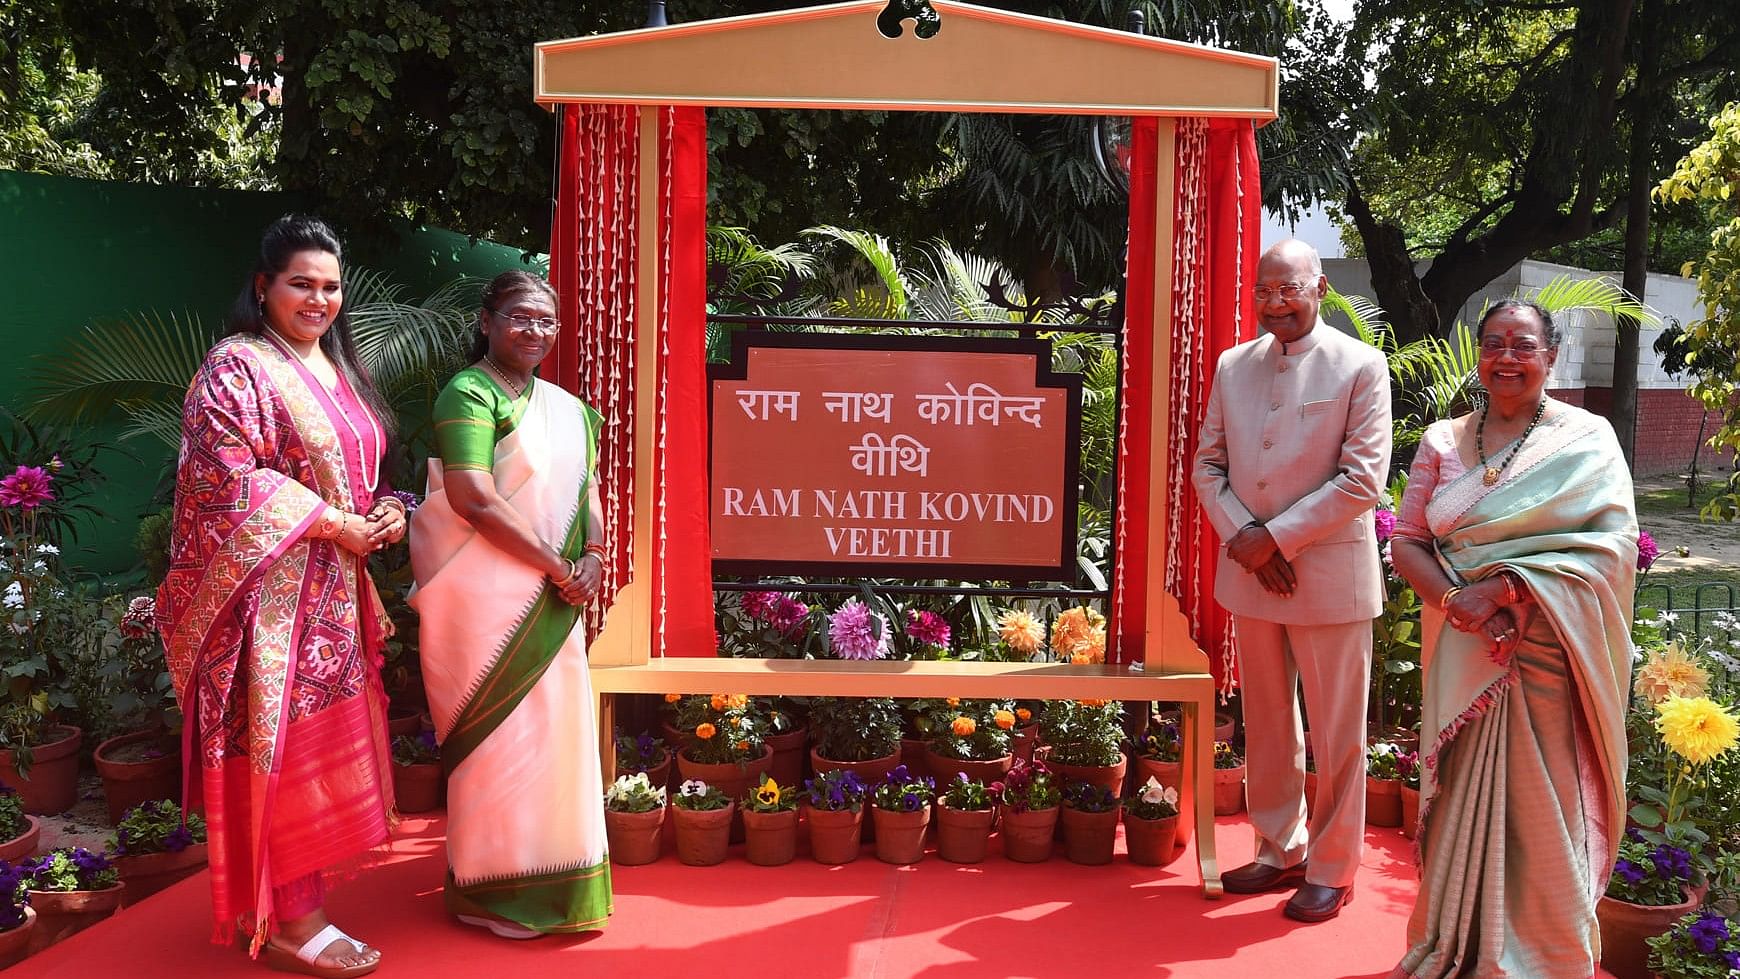 <div class="paragraphs"><p>Ram Nath Kovind inaugurated a street named after him at the Rashtrapati Bhavan estate.</p></div>